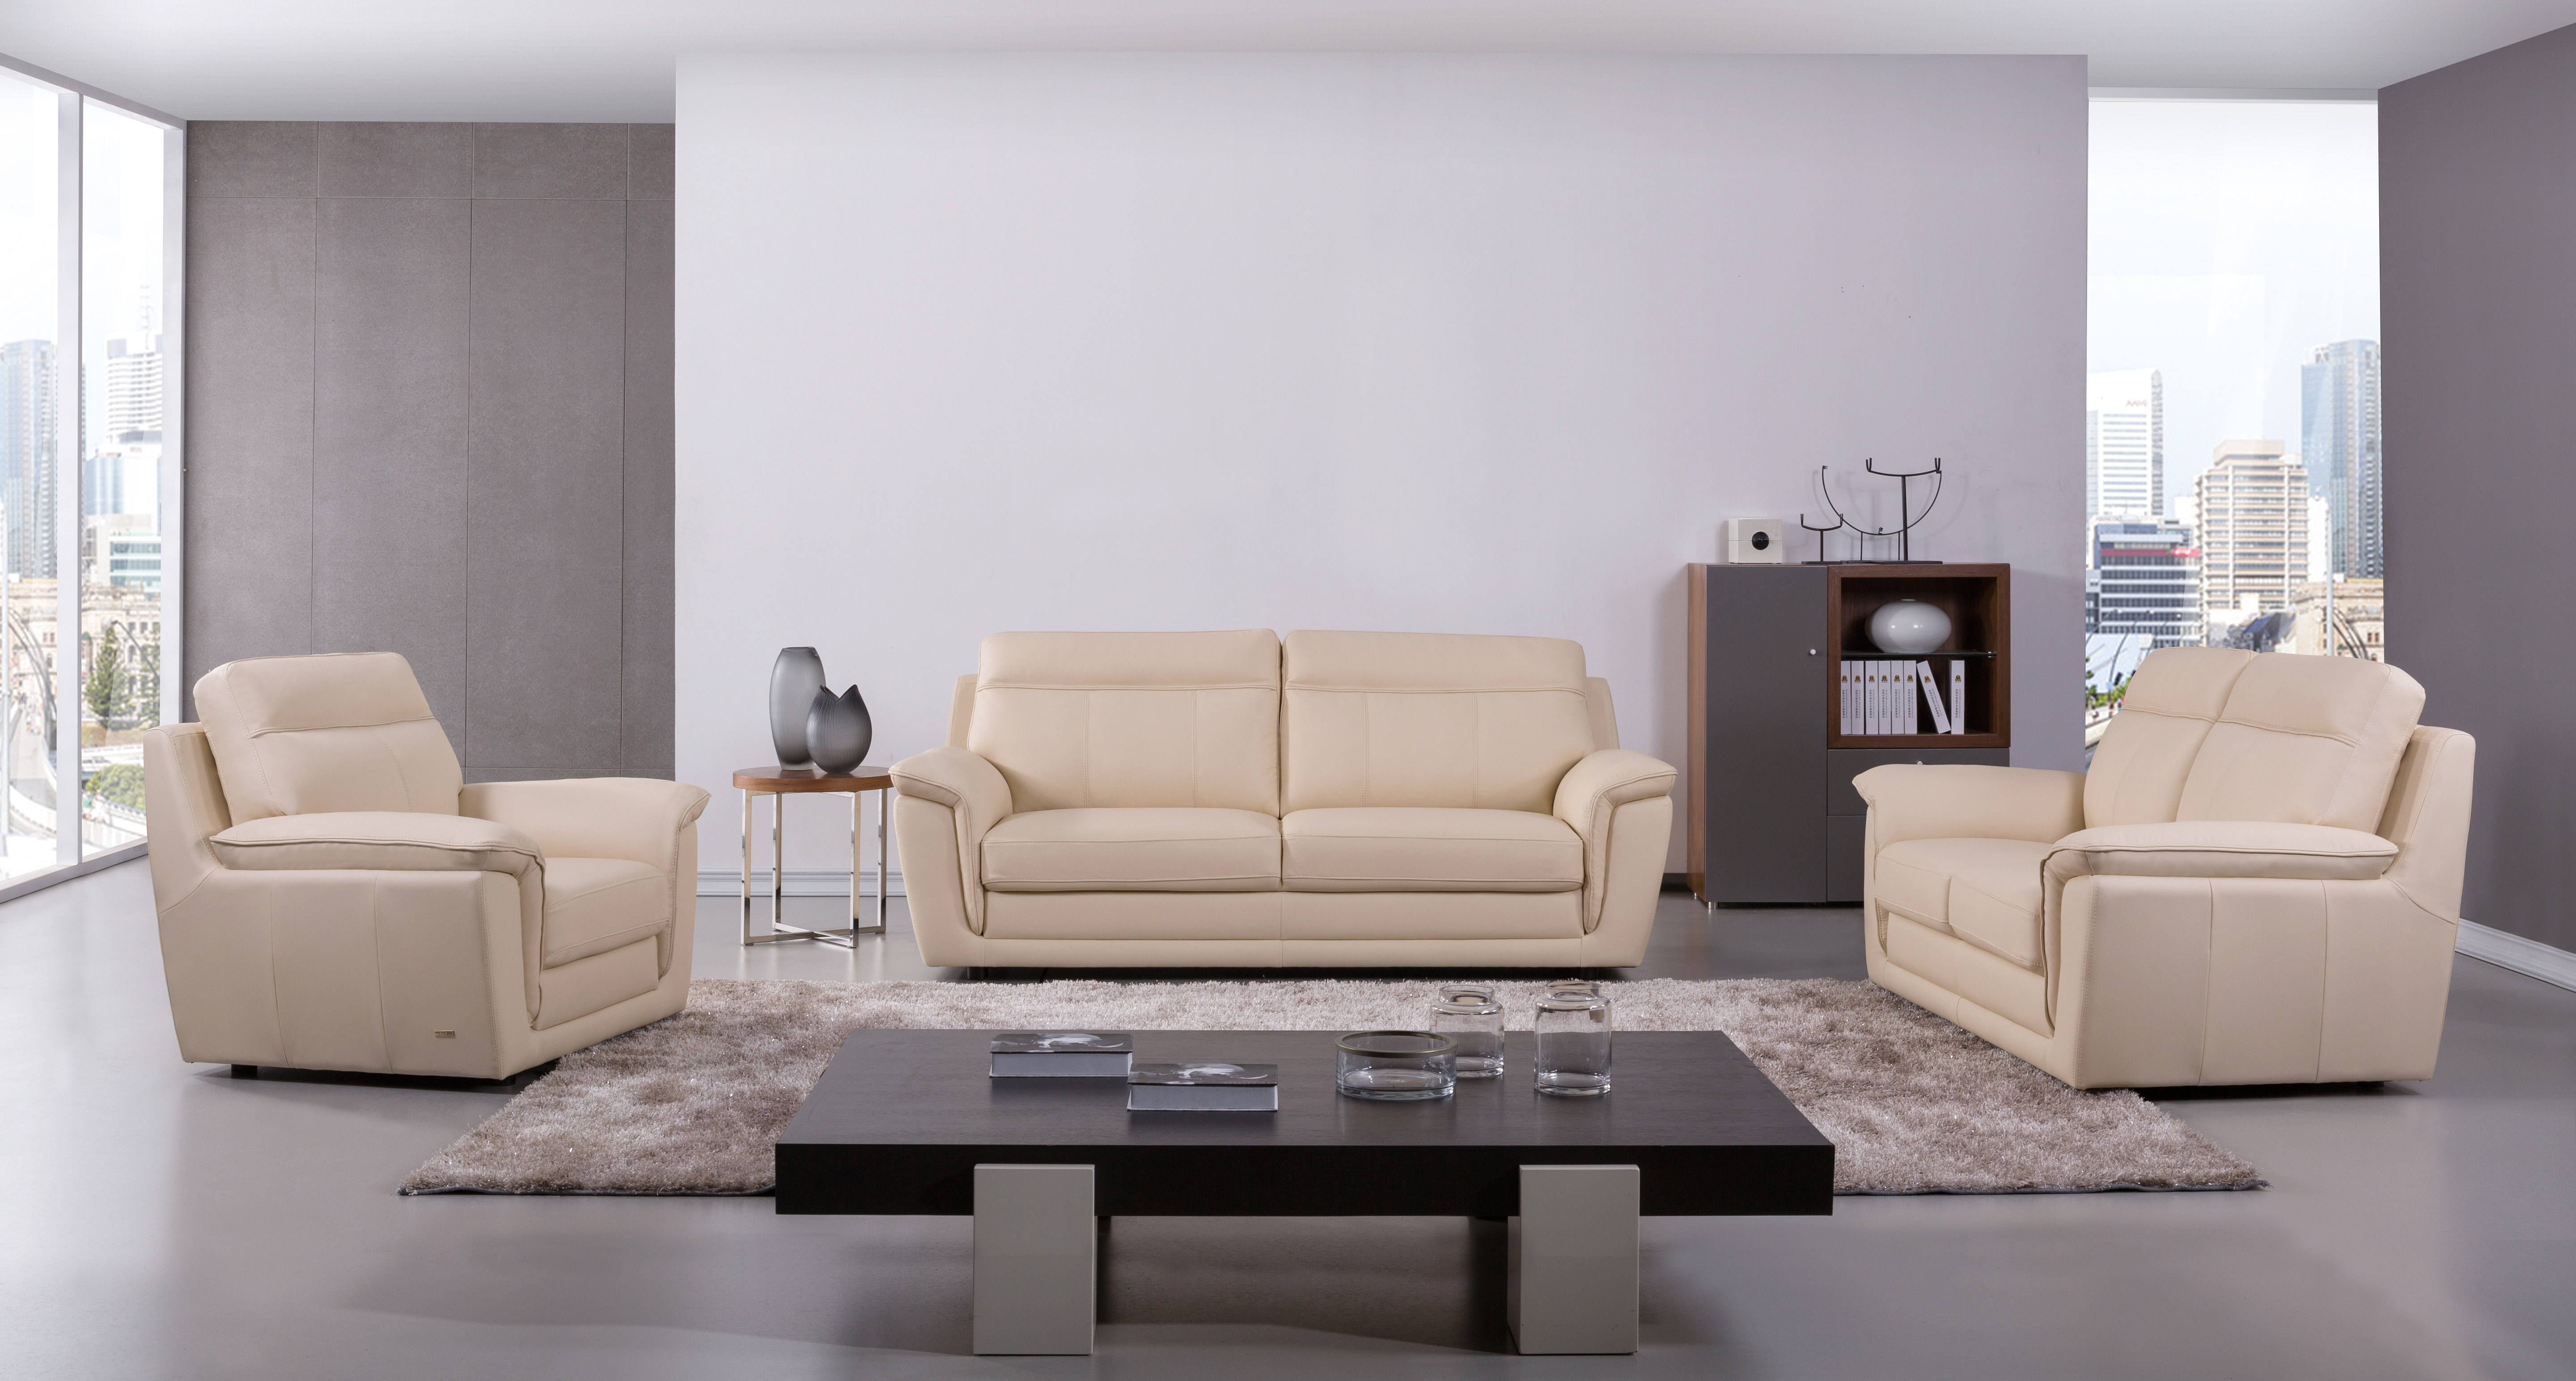 leather 3 piece sofa setbed ebay